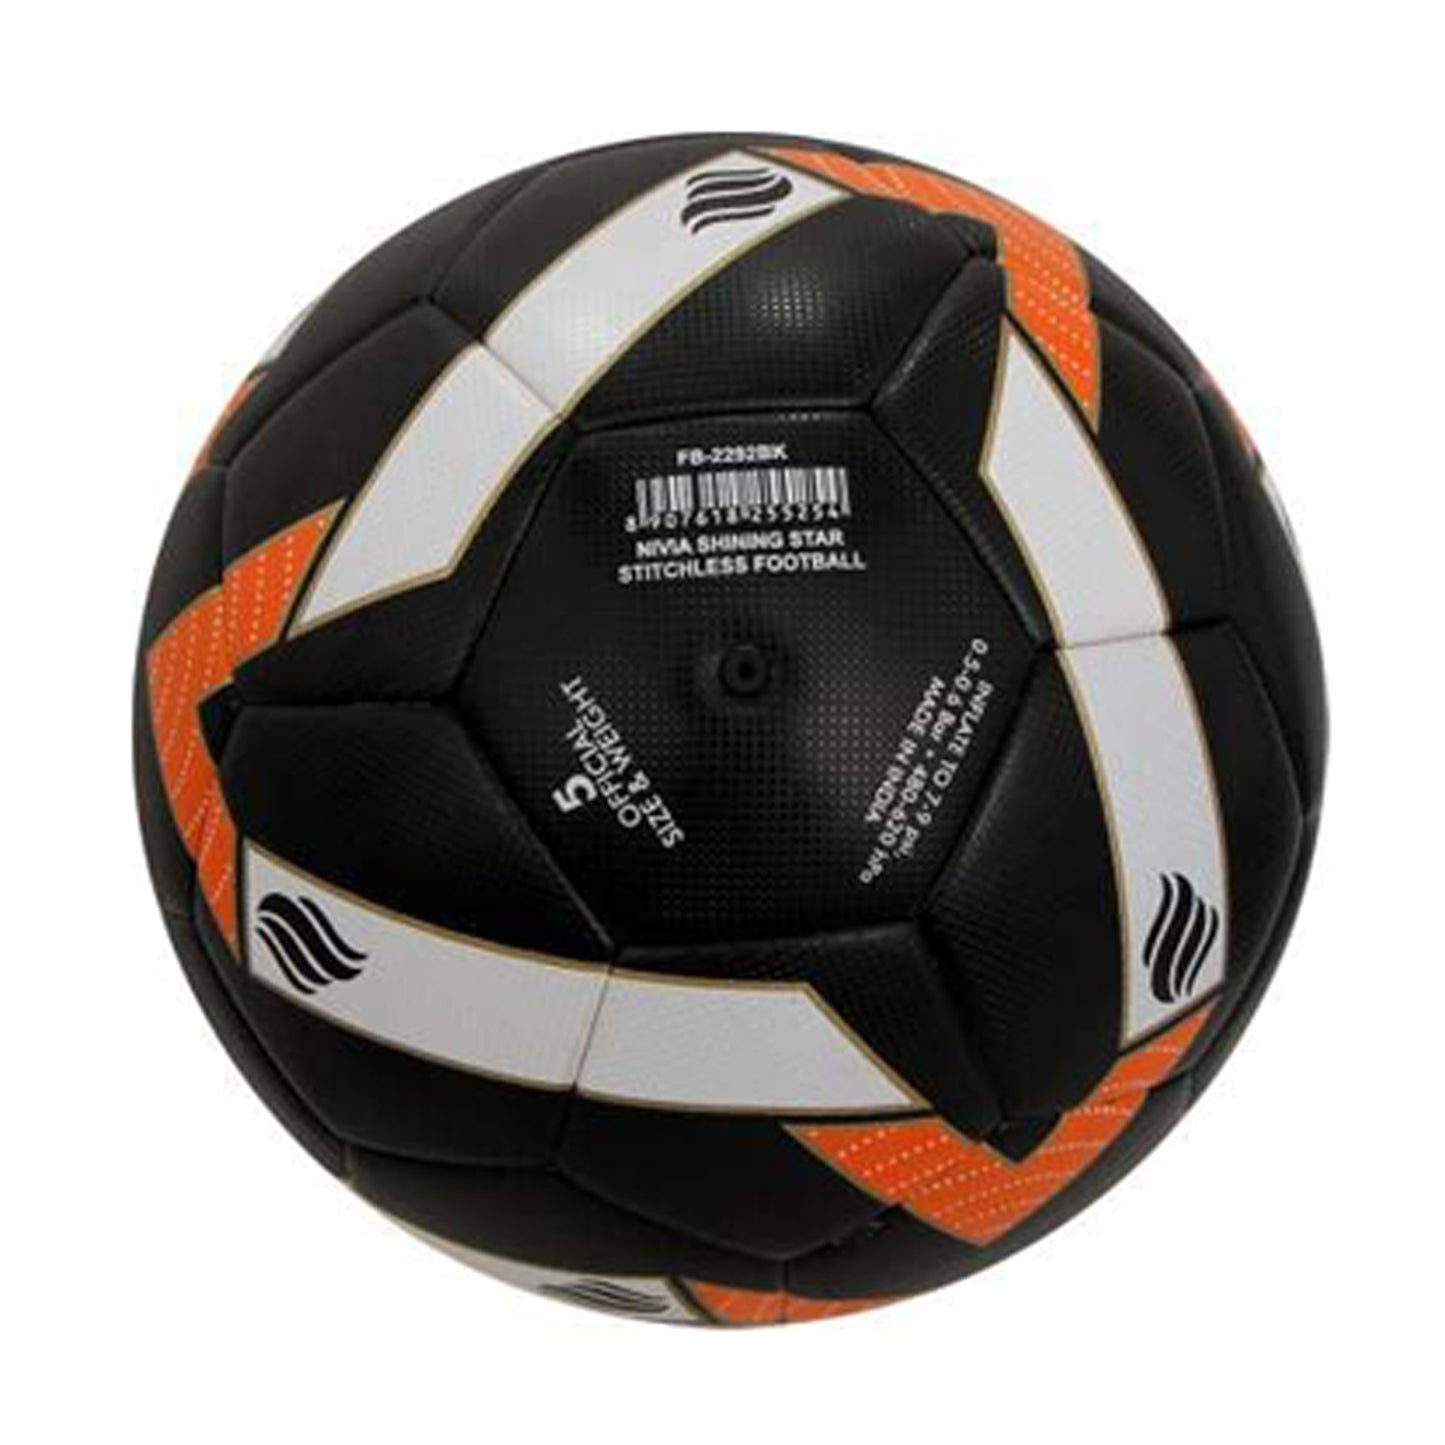 Nivia Shining Star Stichiess Football, Black/White/Orange - Size 5 - Best Price online Prokicksports.com